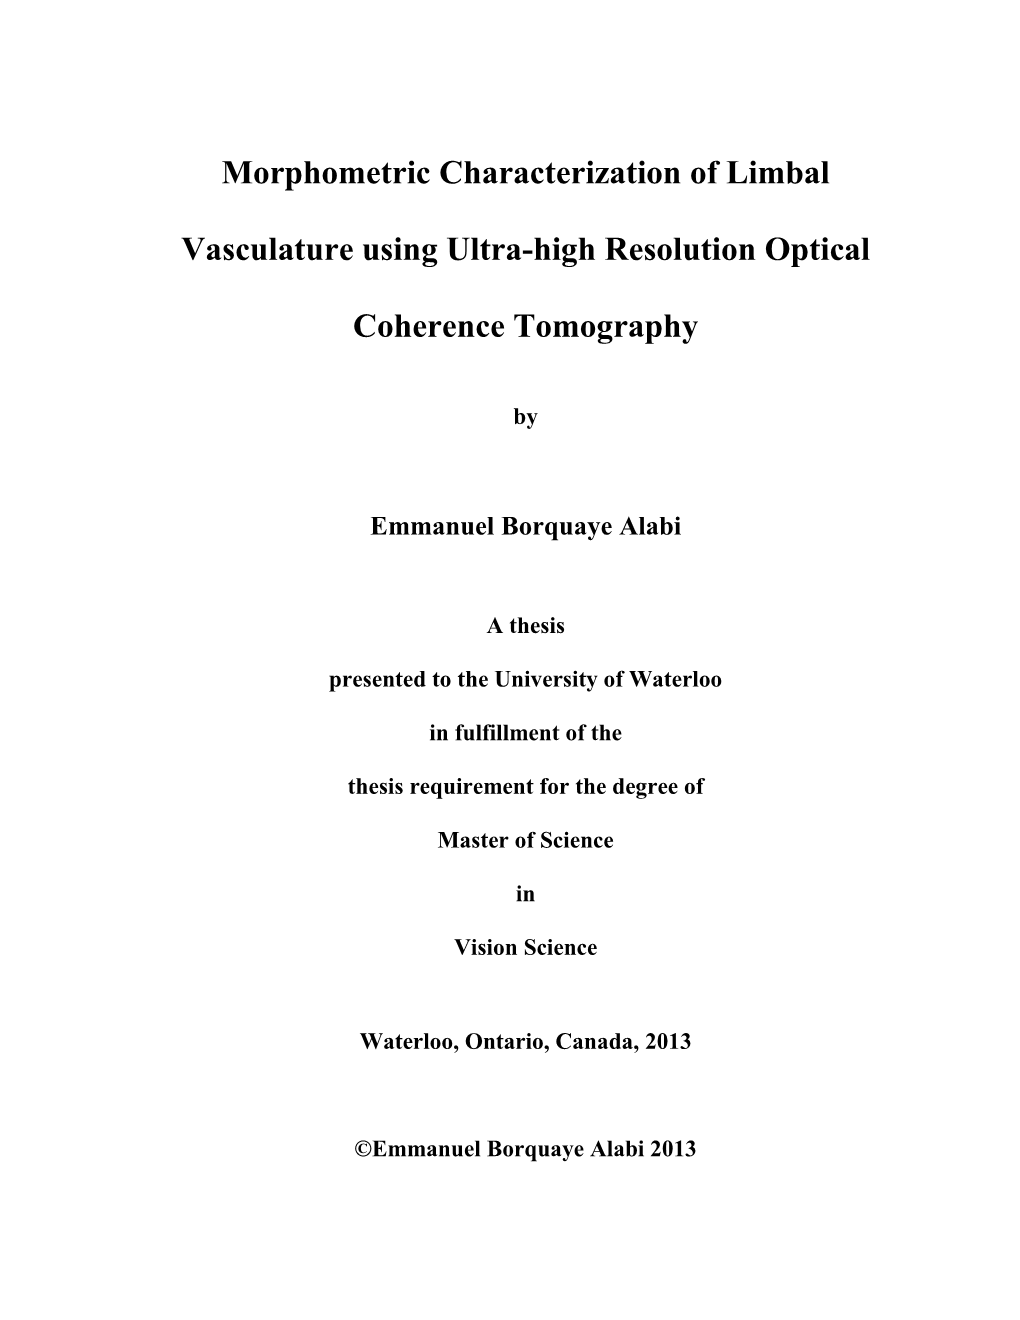 Morphometric Characterization of Limbal Vasculature Using Ultra-High